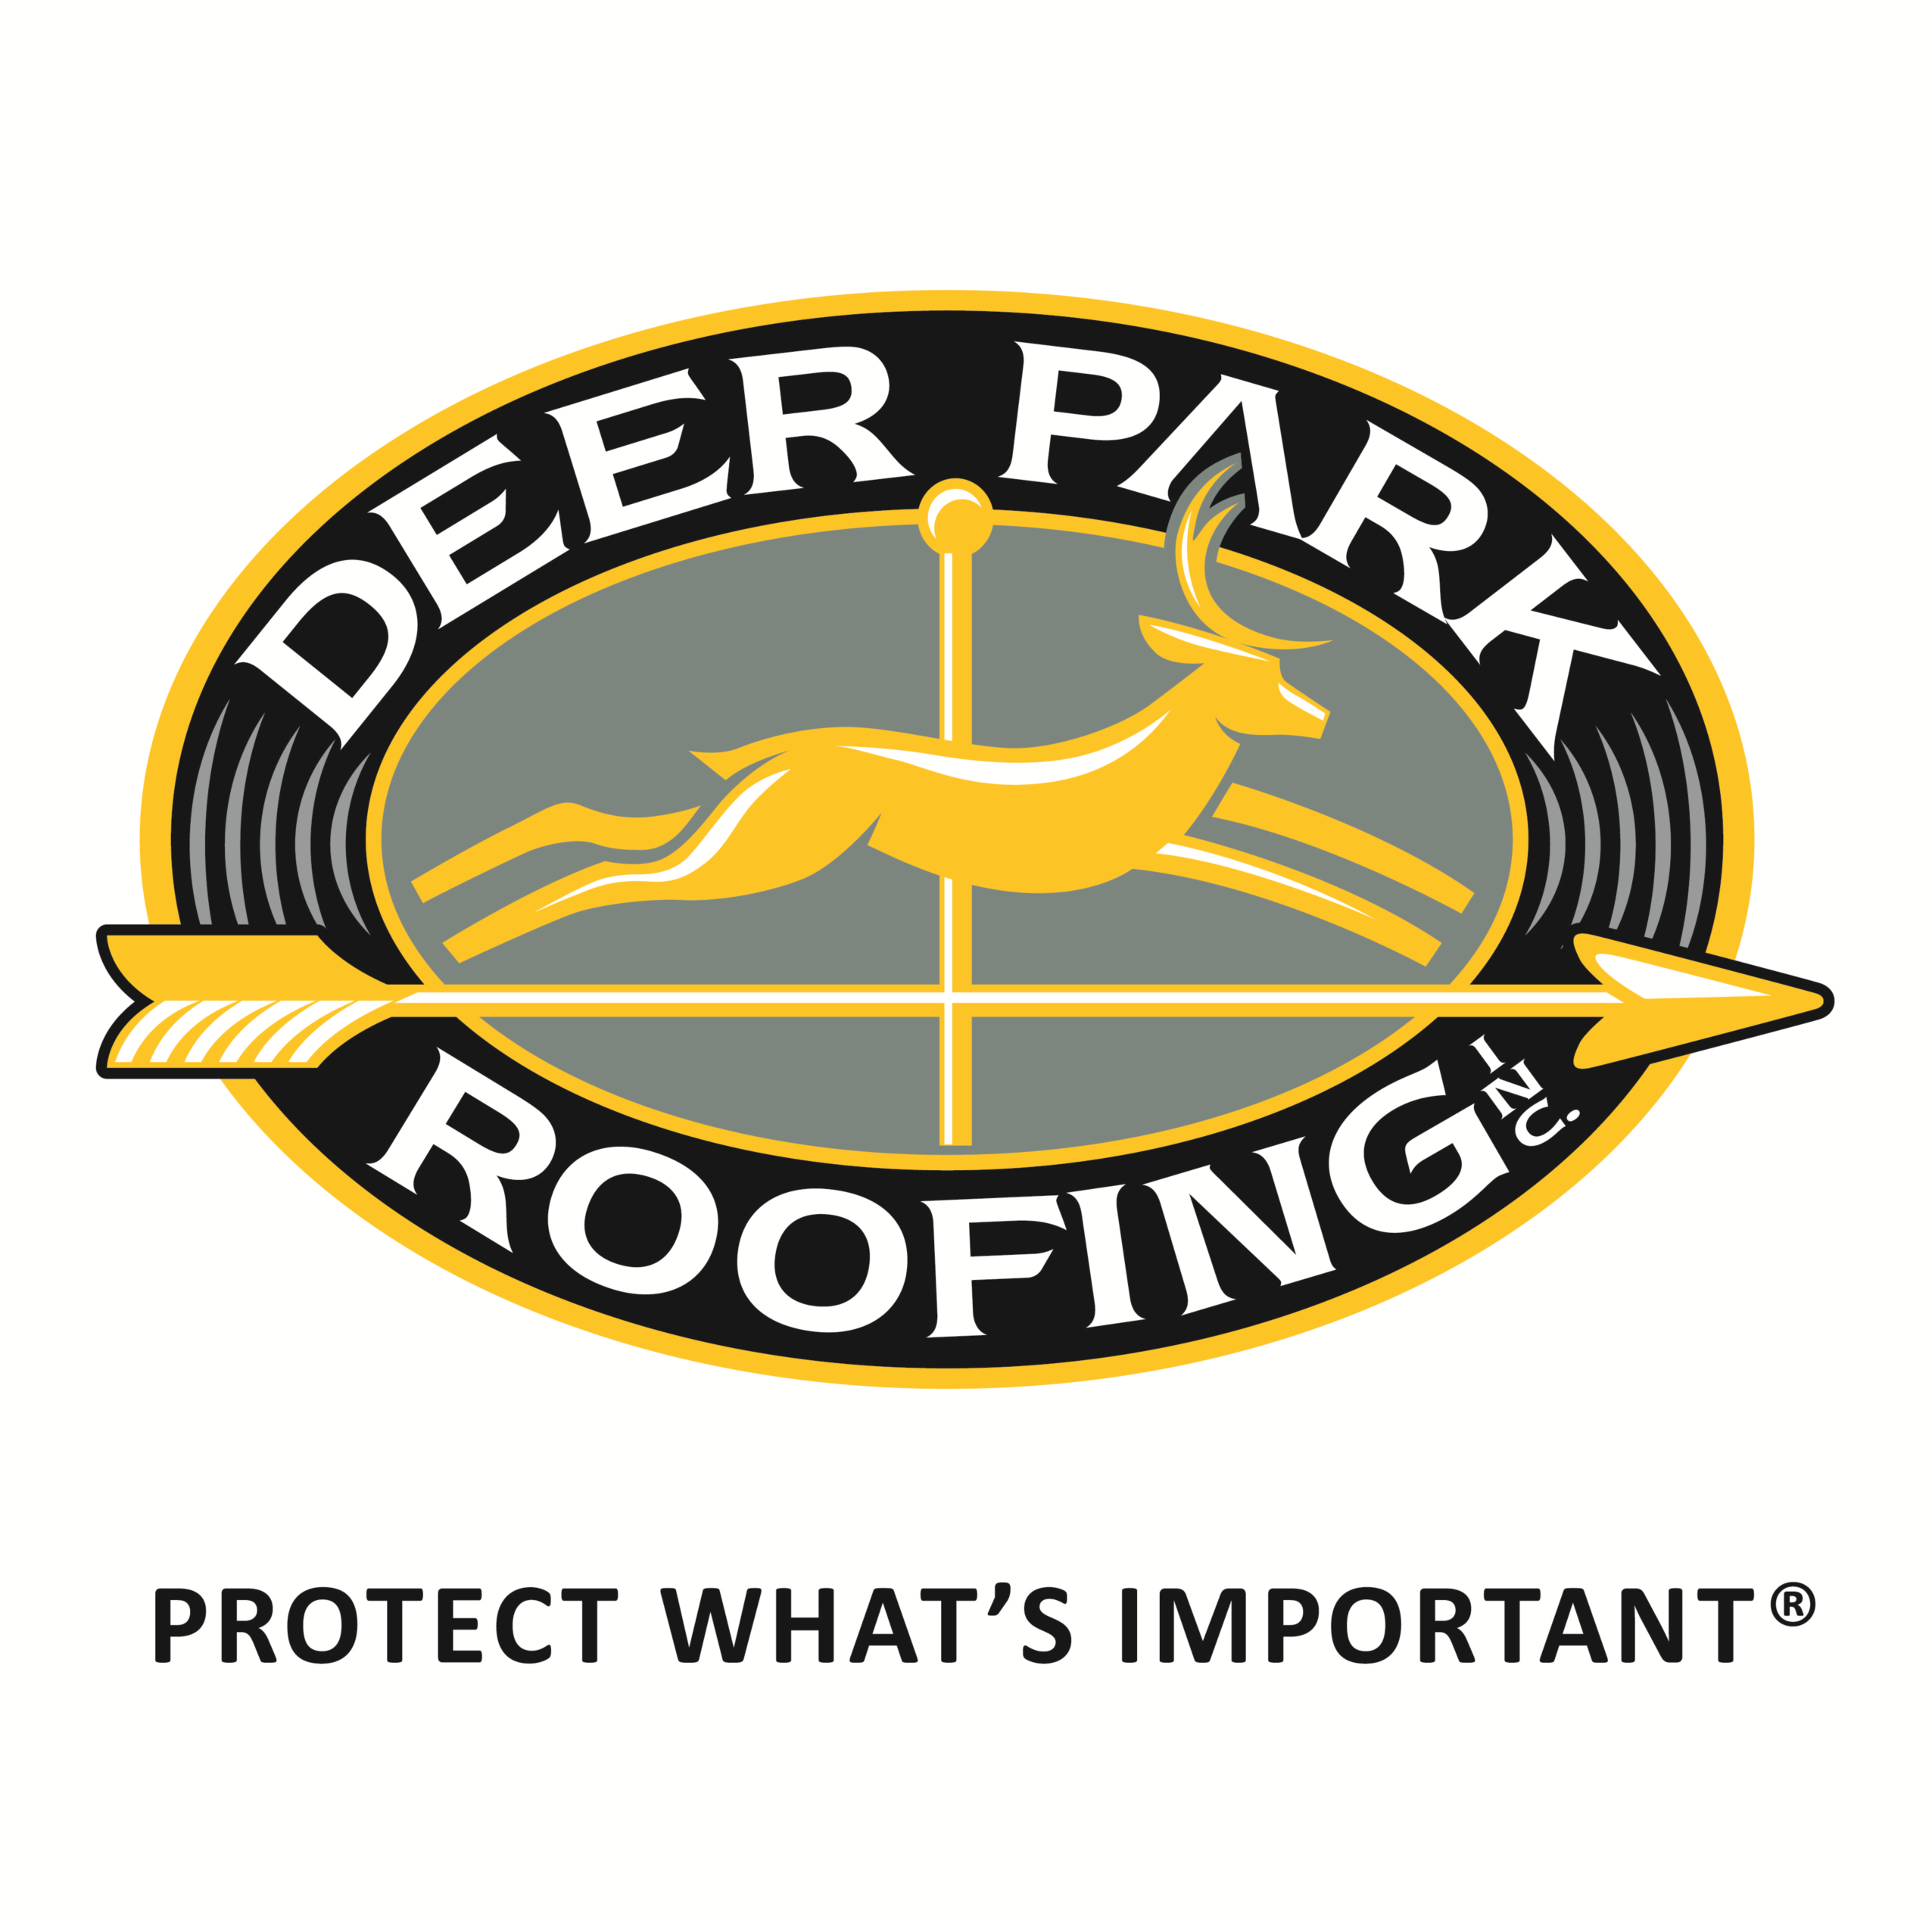 Deer Park Roofing Company Logo